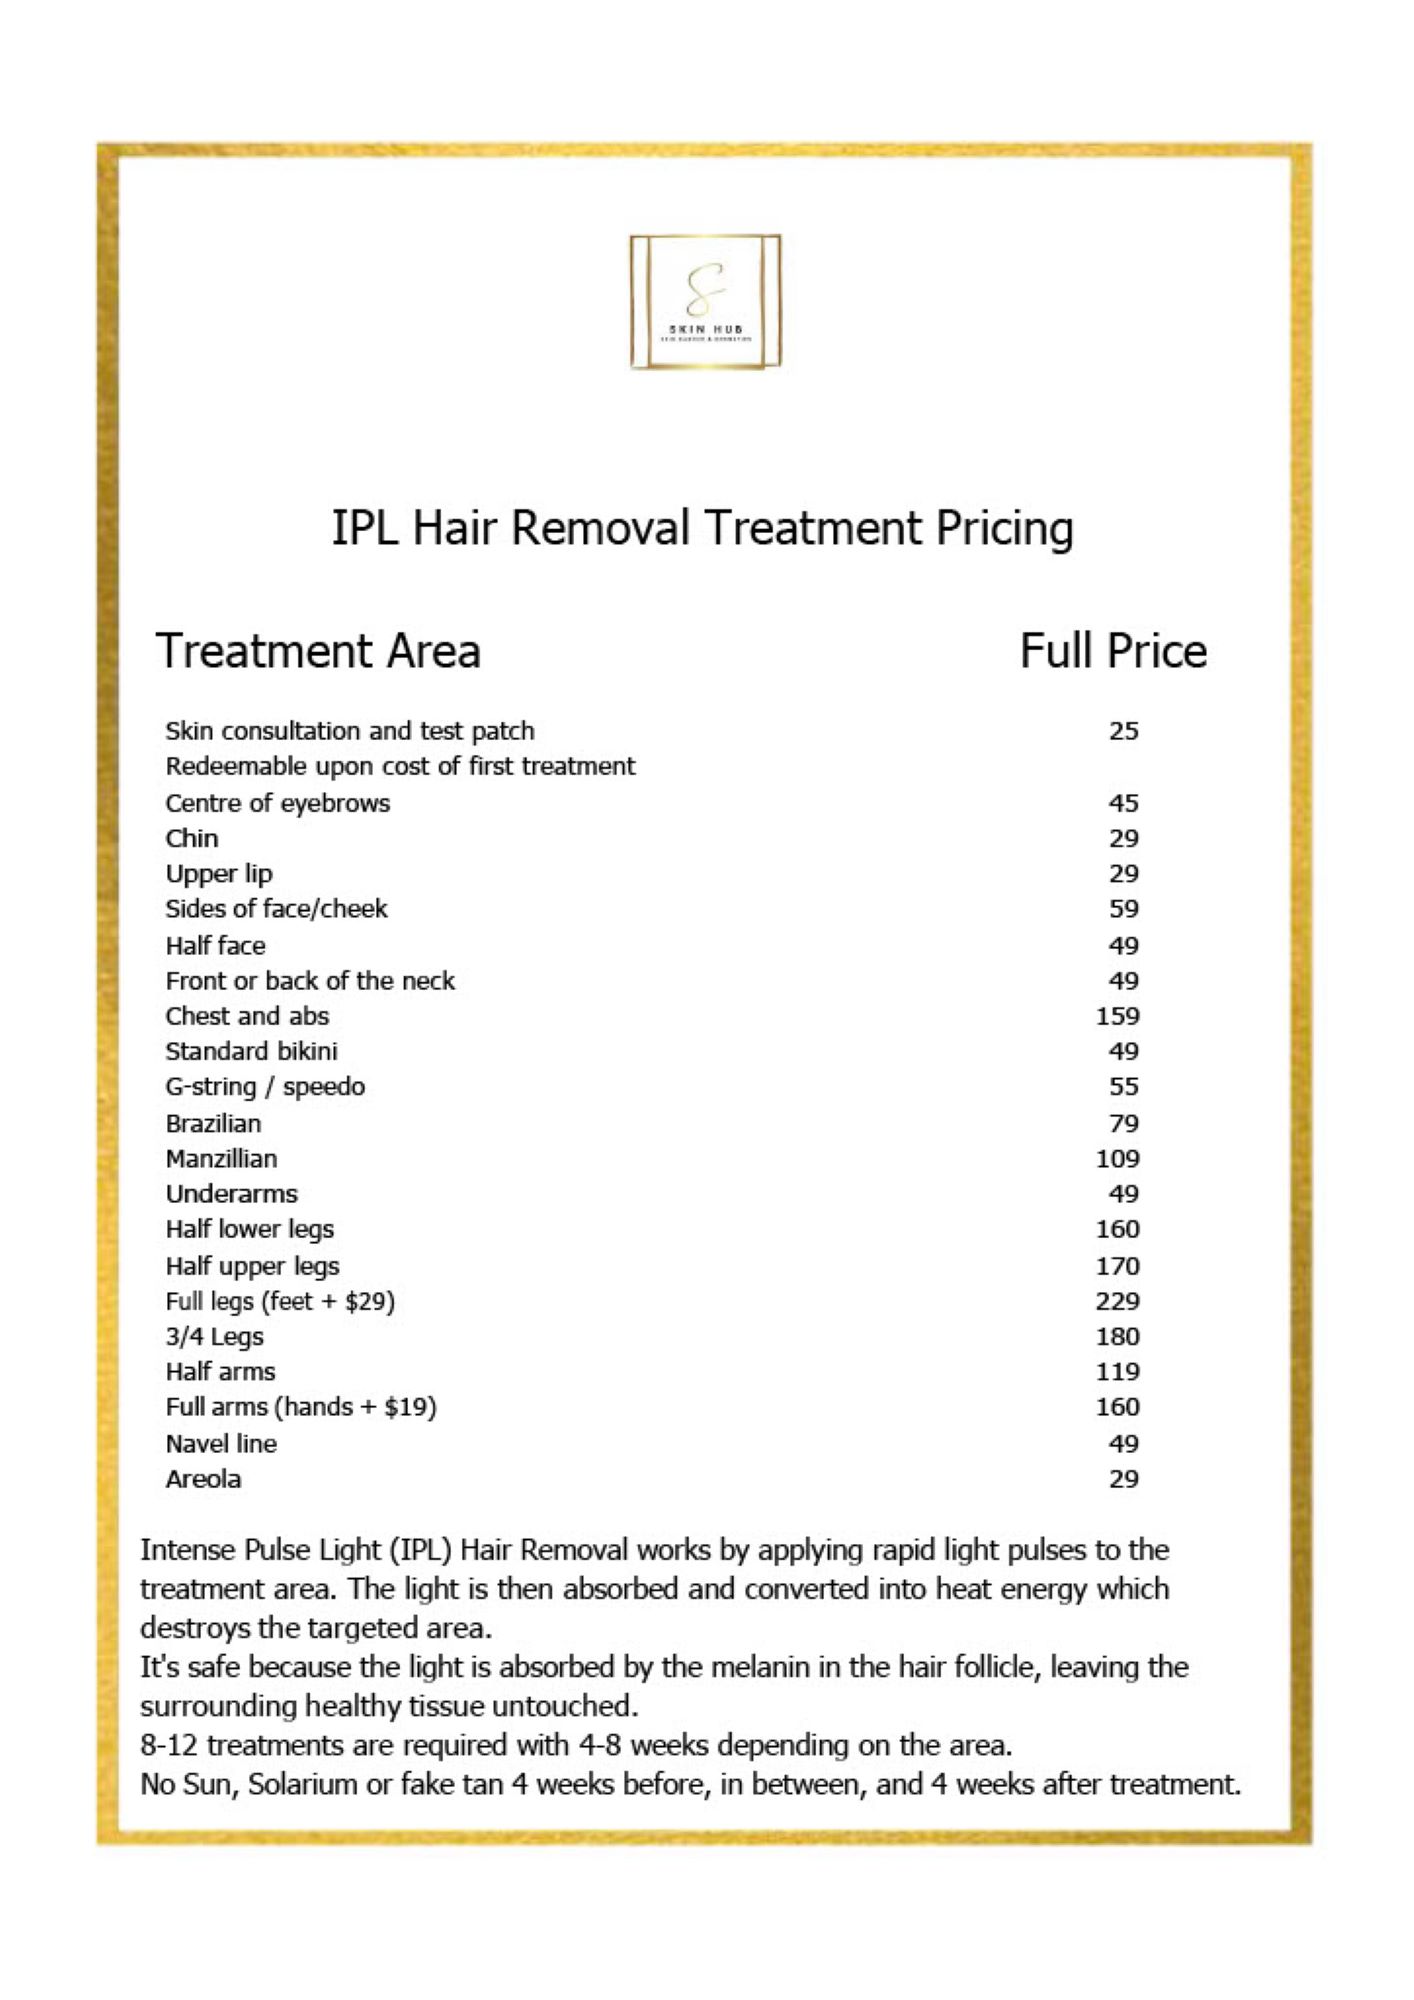 IPL Hair Removal Price